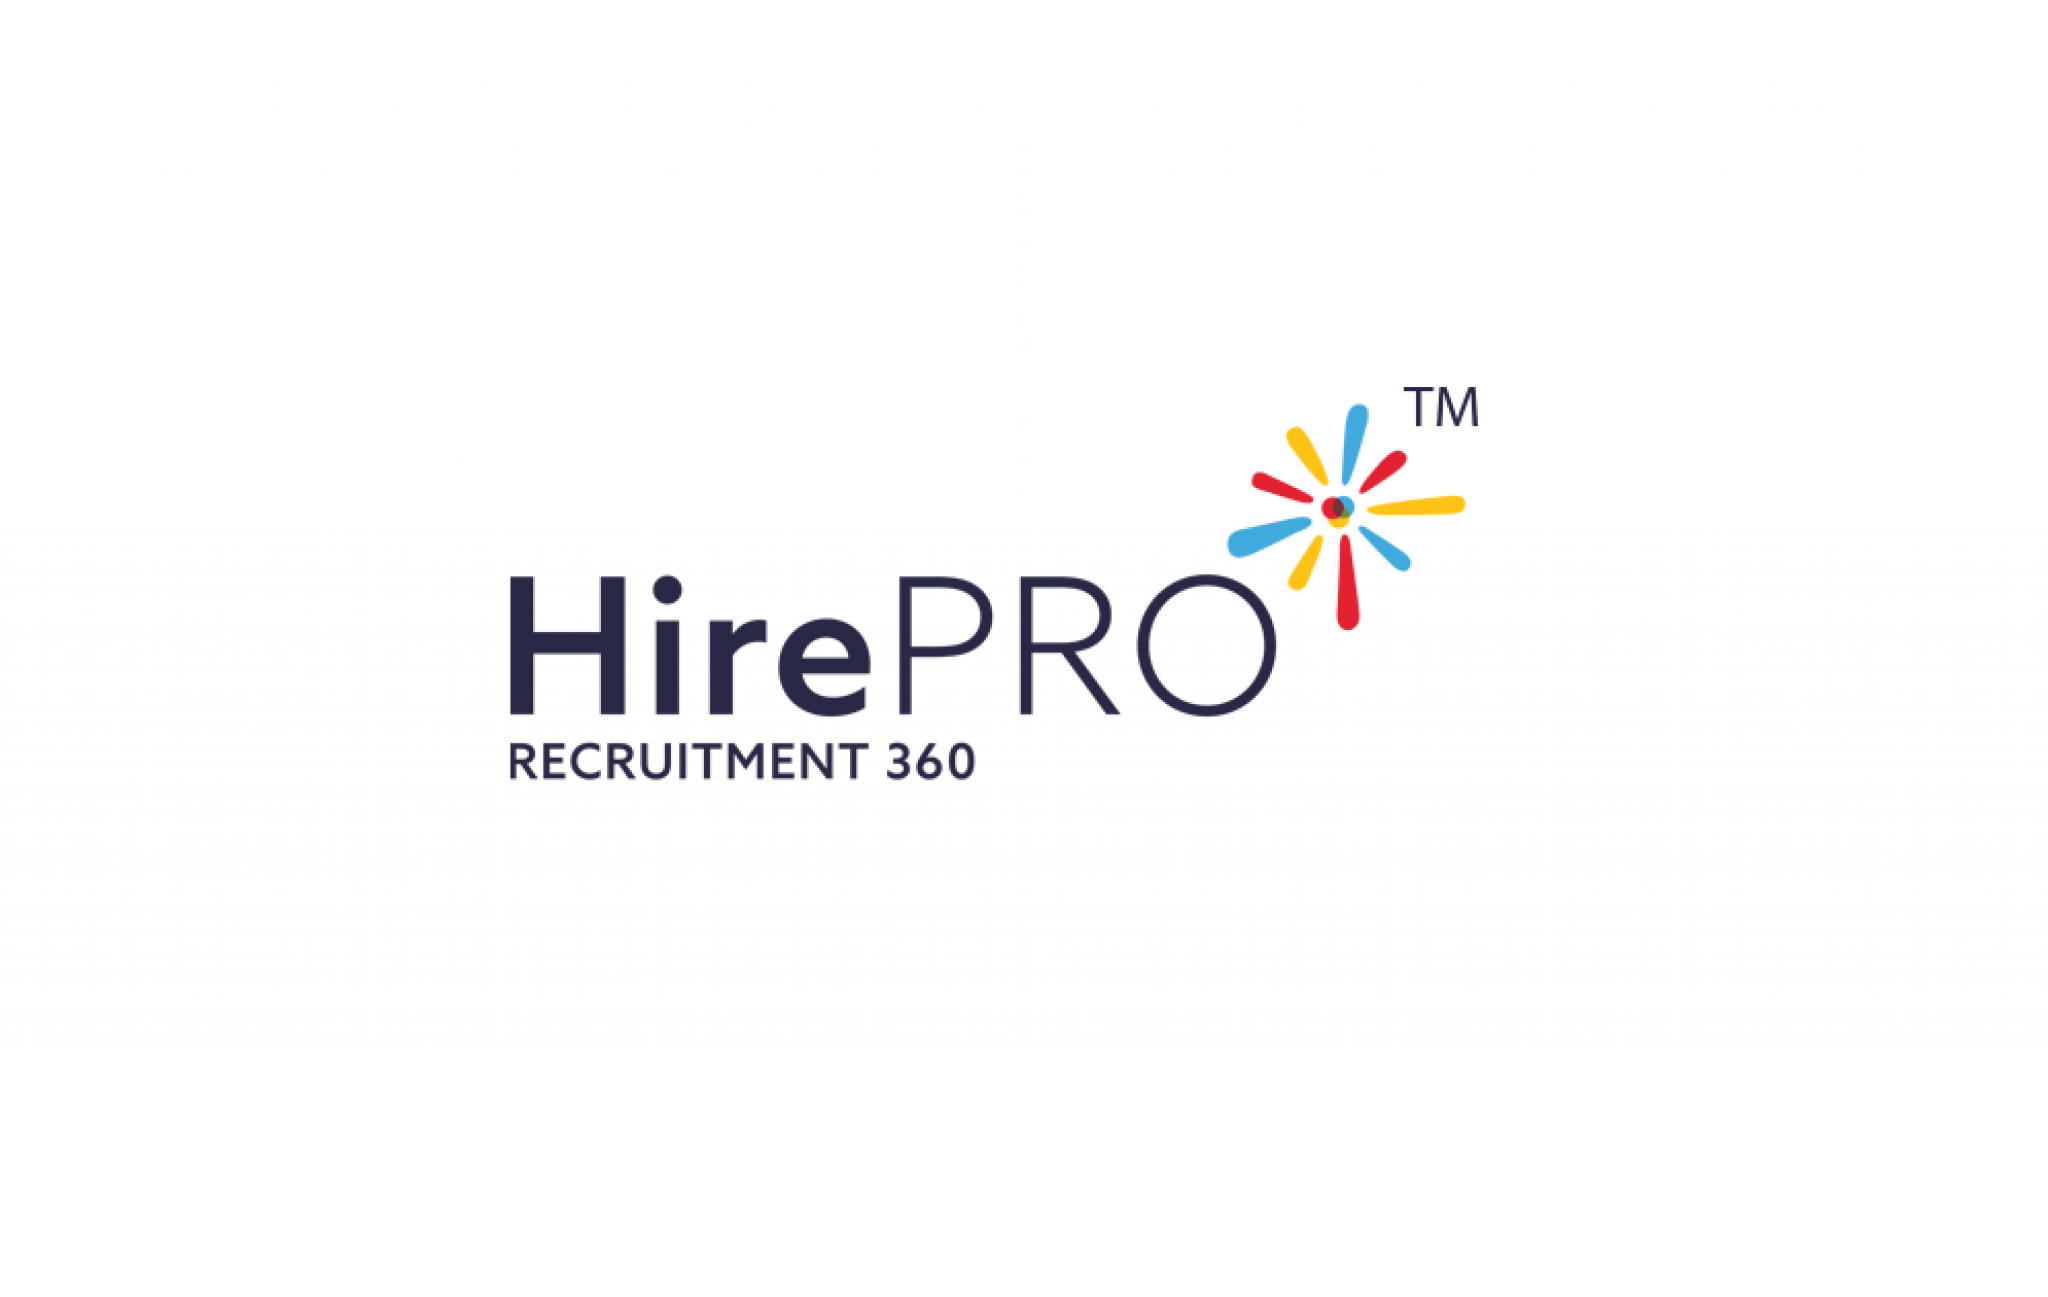 hirepro-complete-recruitment-solution-ansefy-prepare